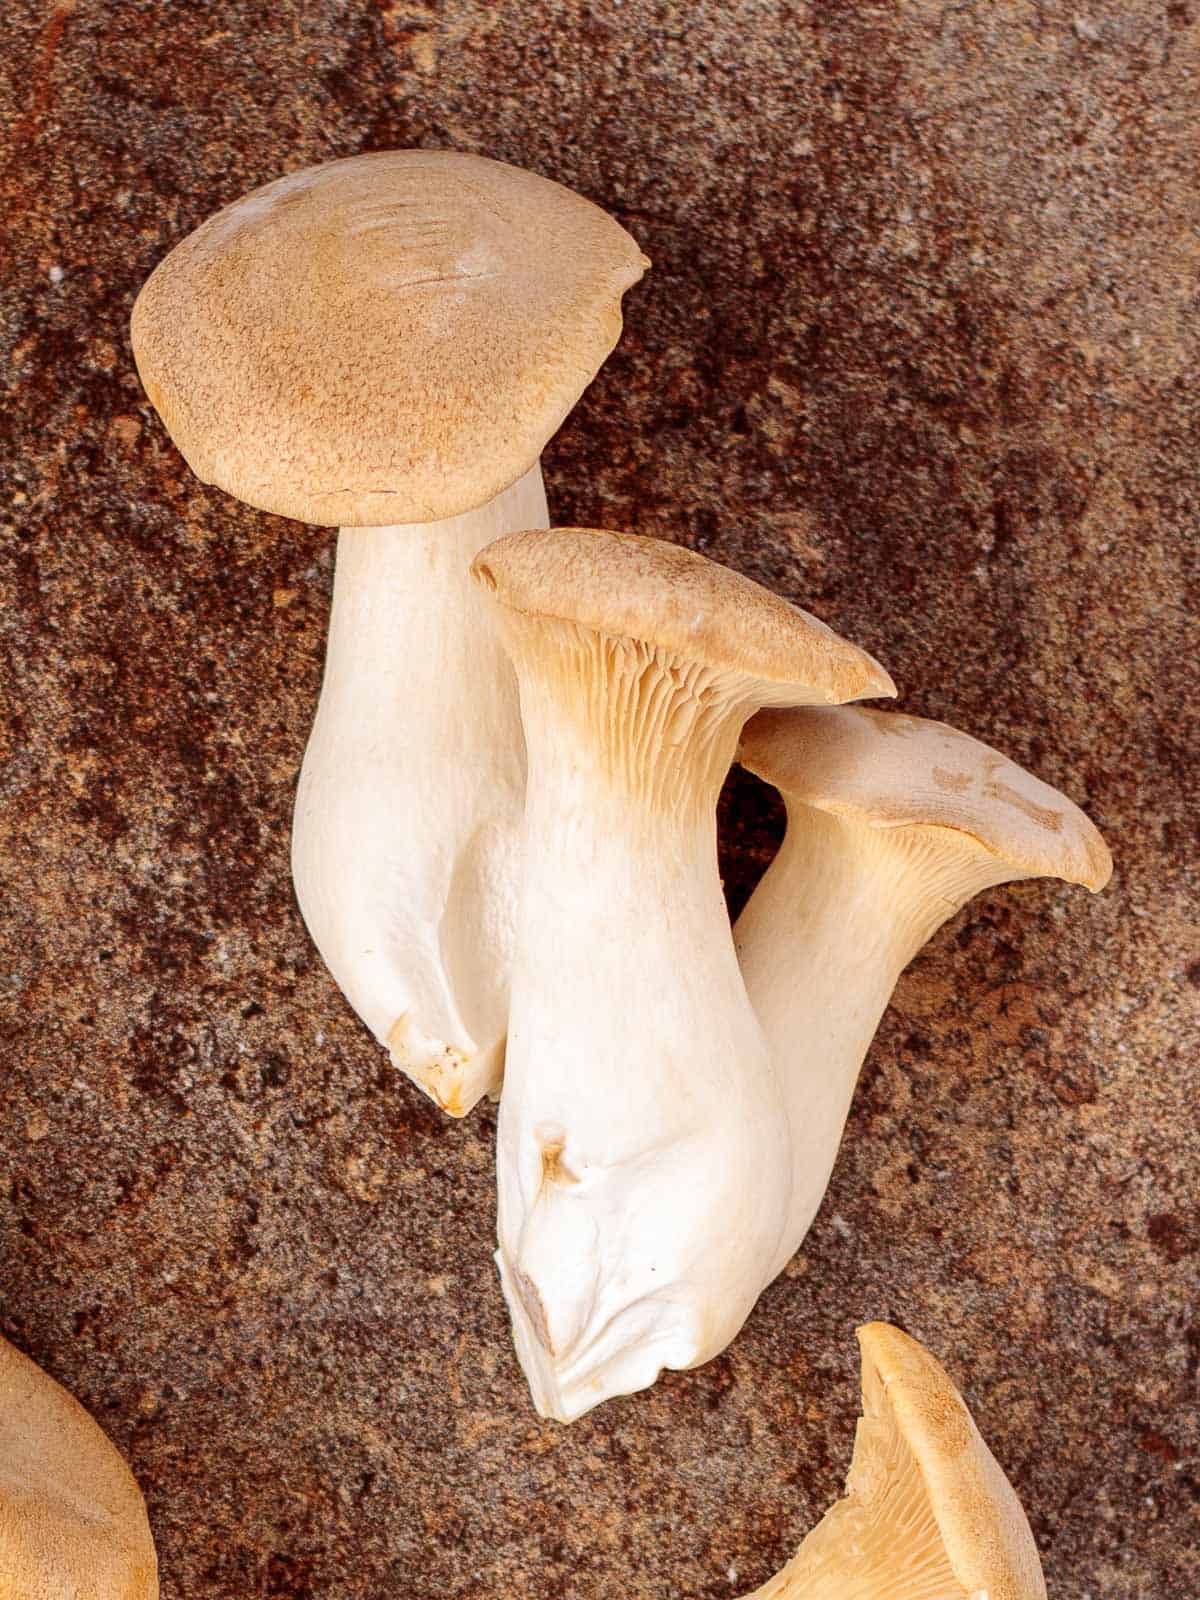 Hamakua king oyster mushrooms also called trumpet mushrooms.